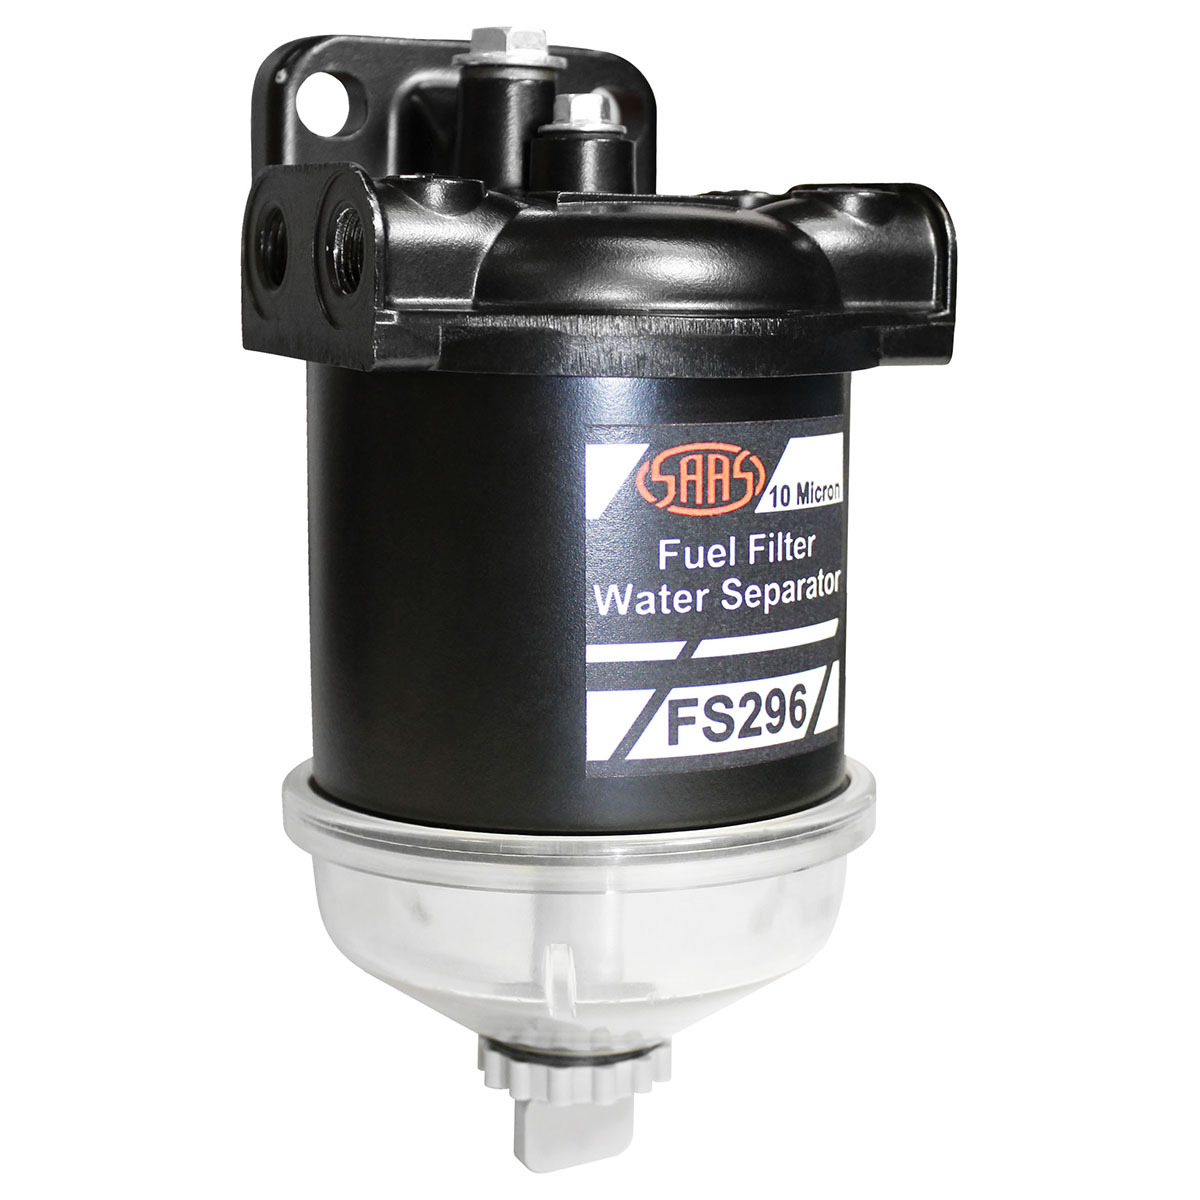 Fuel Filter Water Separator 10 Microns Saas Automotive